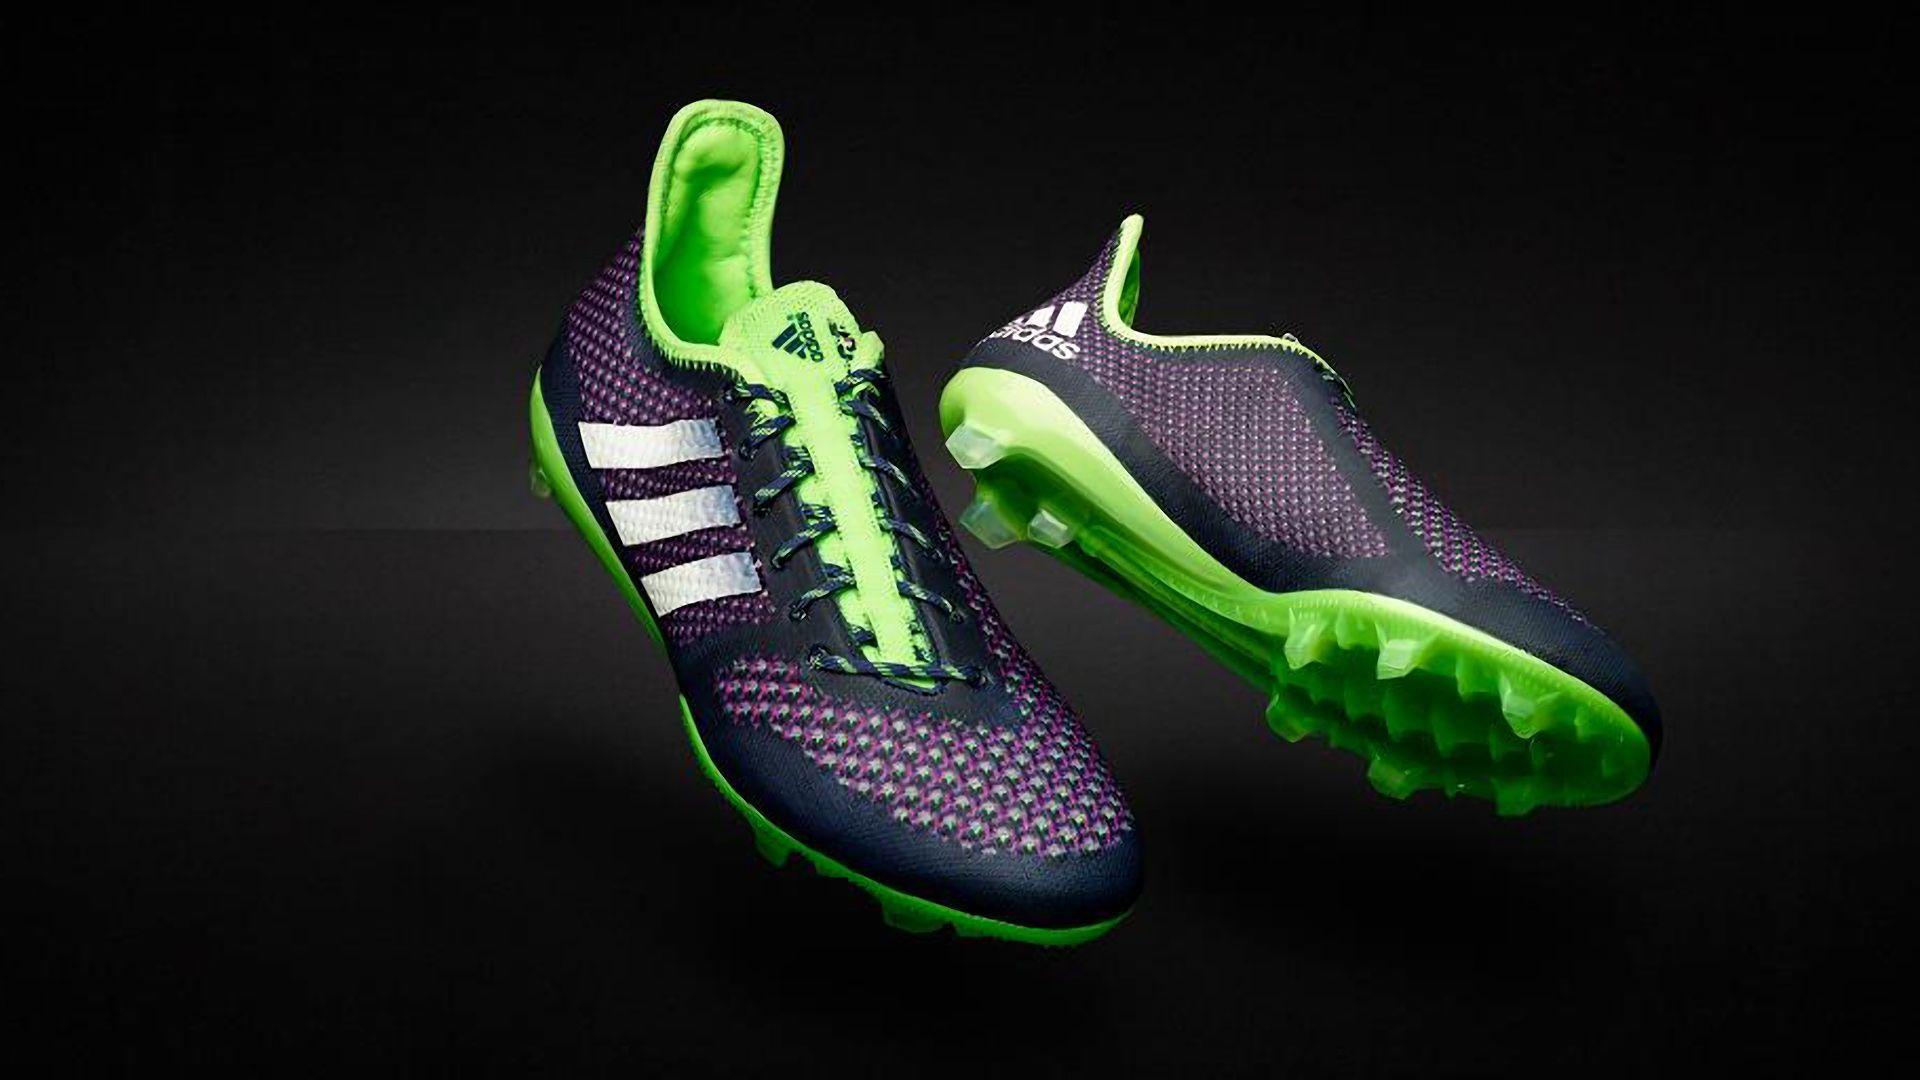 Adidas Primeknit 2.0 Football Boots Wallpaper free desktop